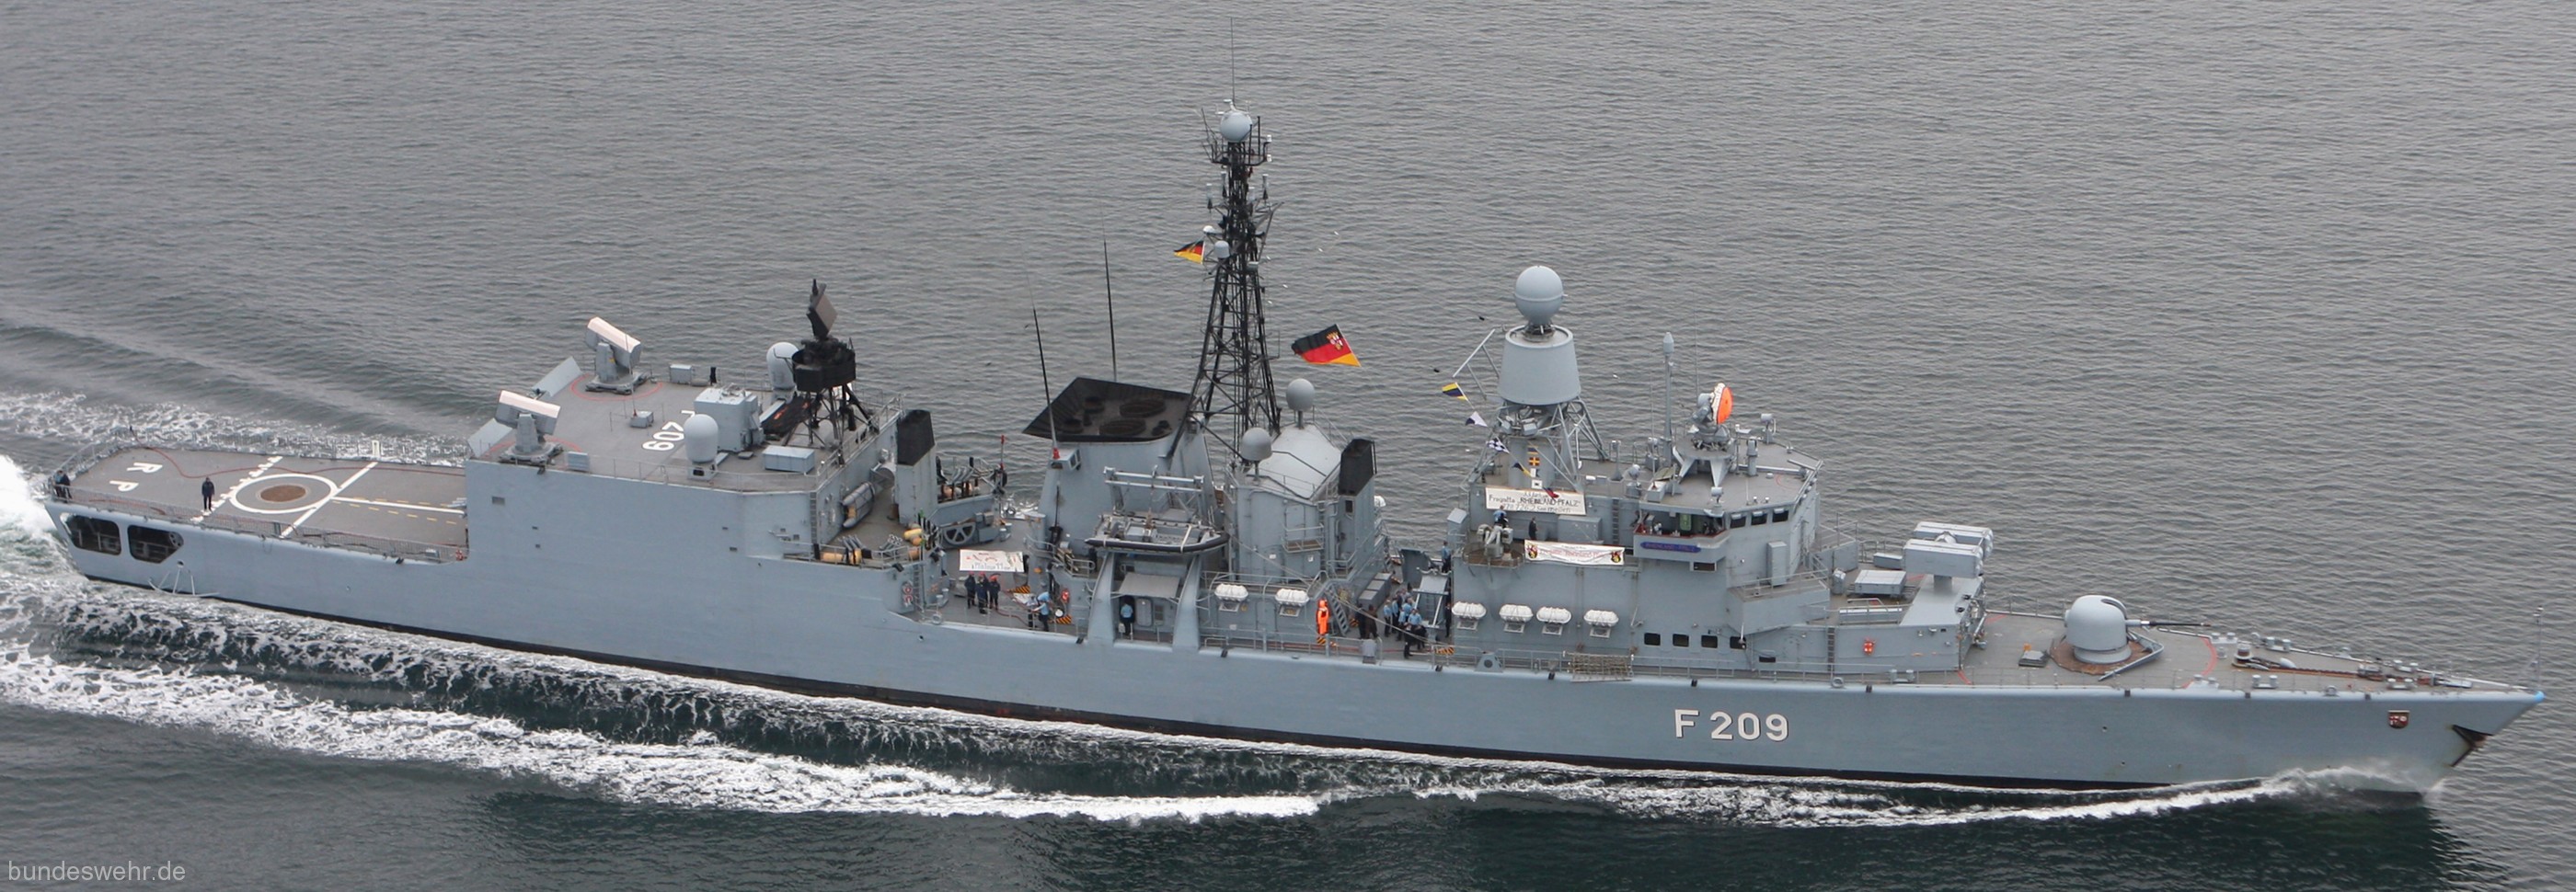 type 122 bremen class frigate german navy deutsche marine 09x